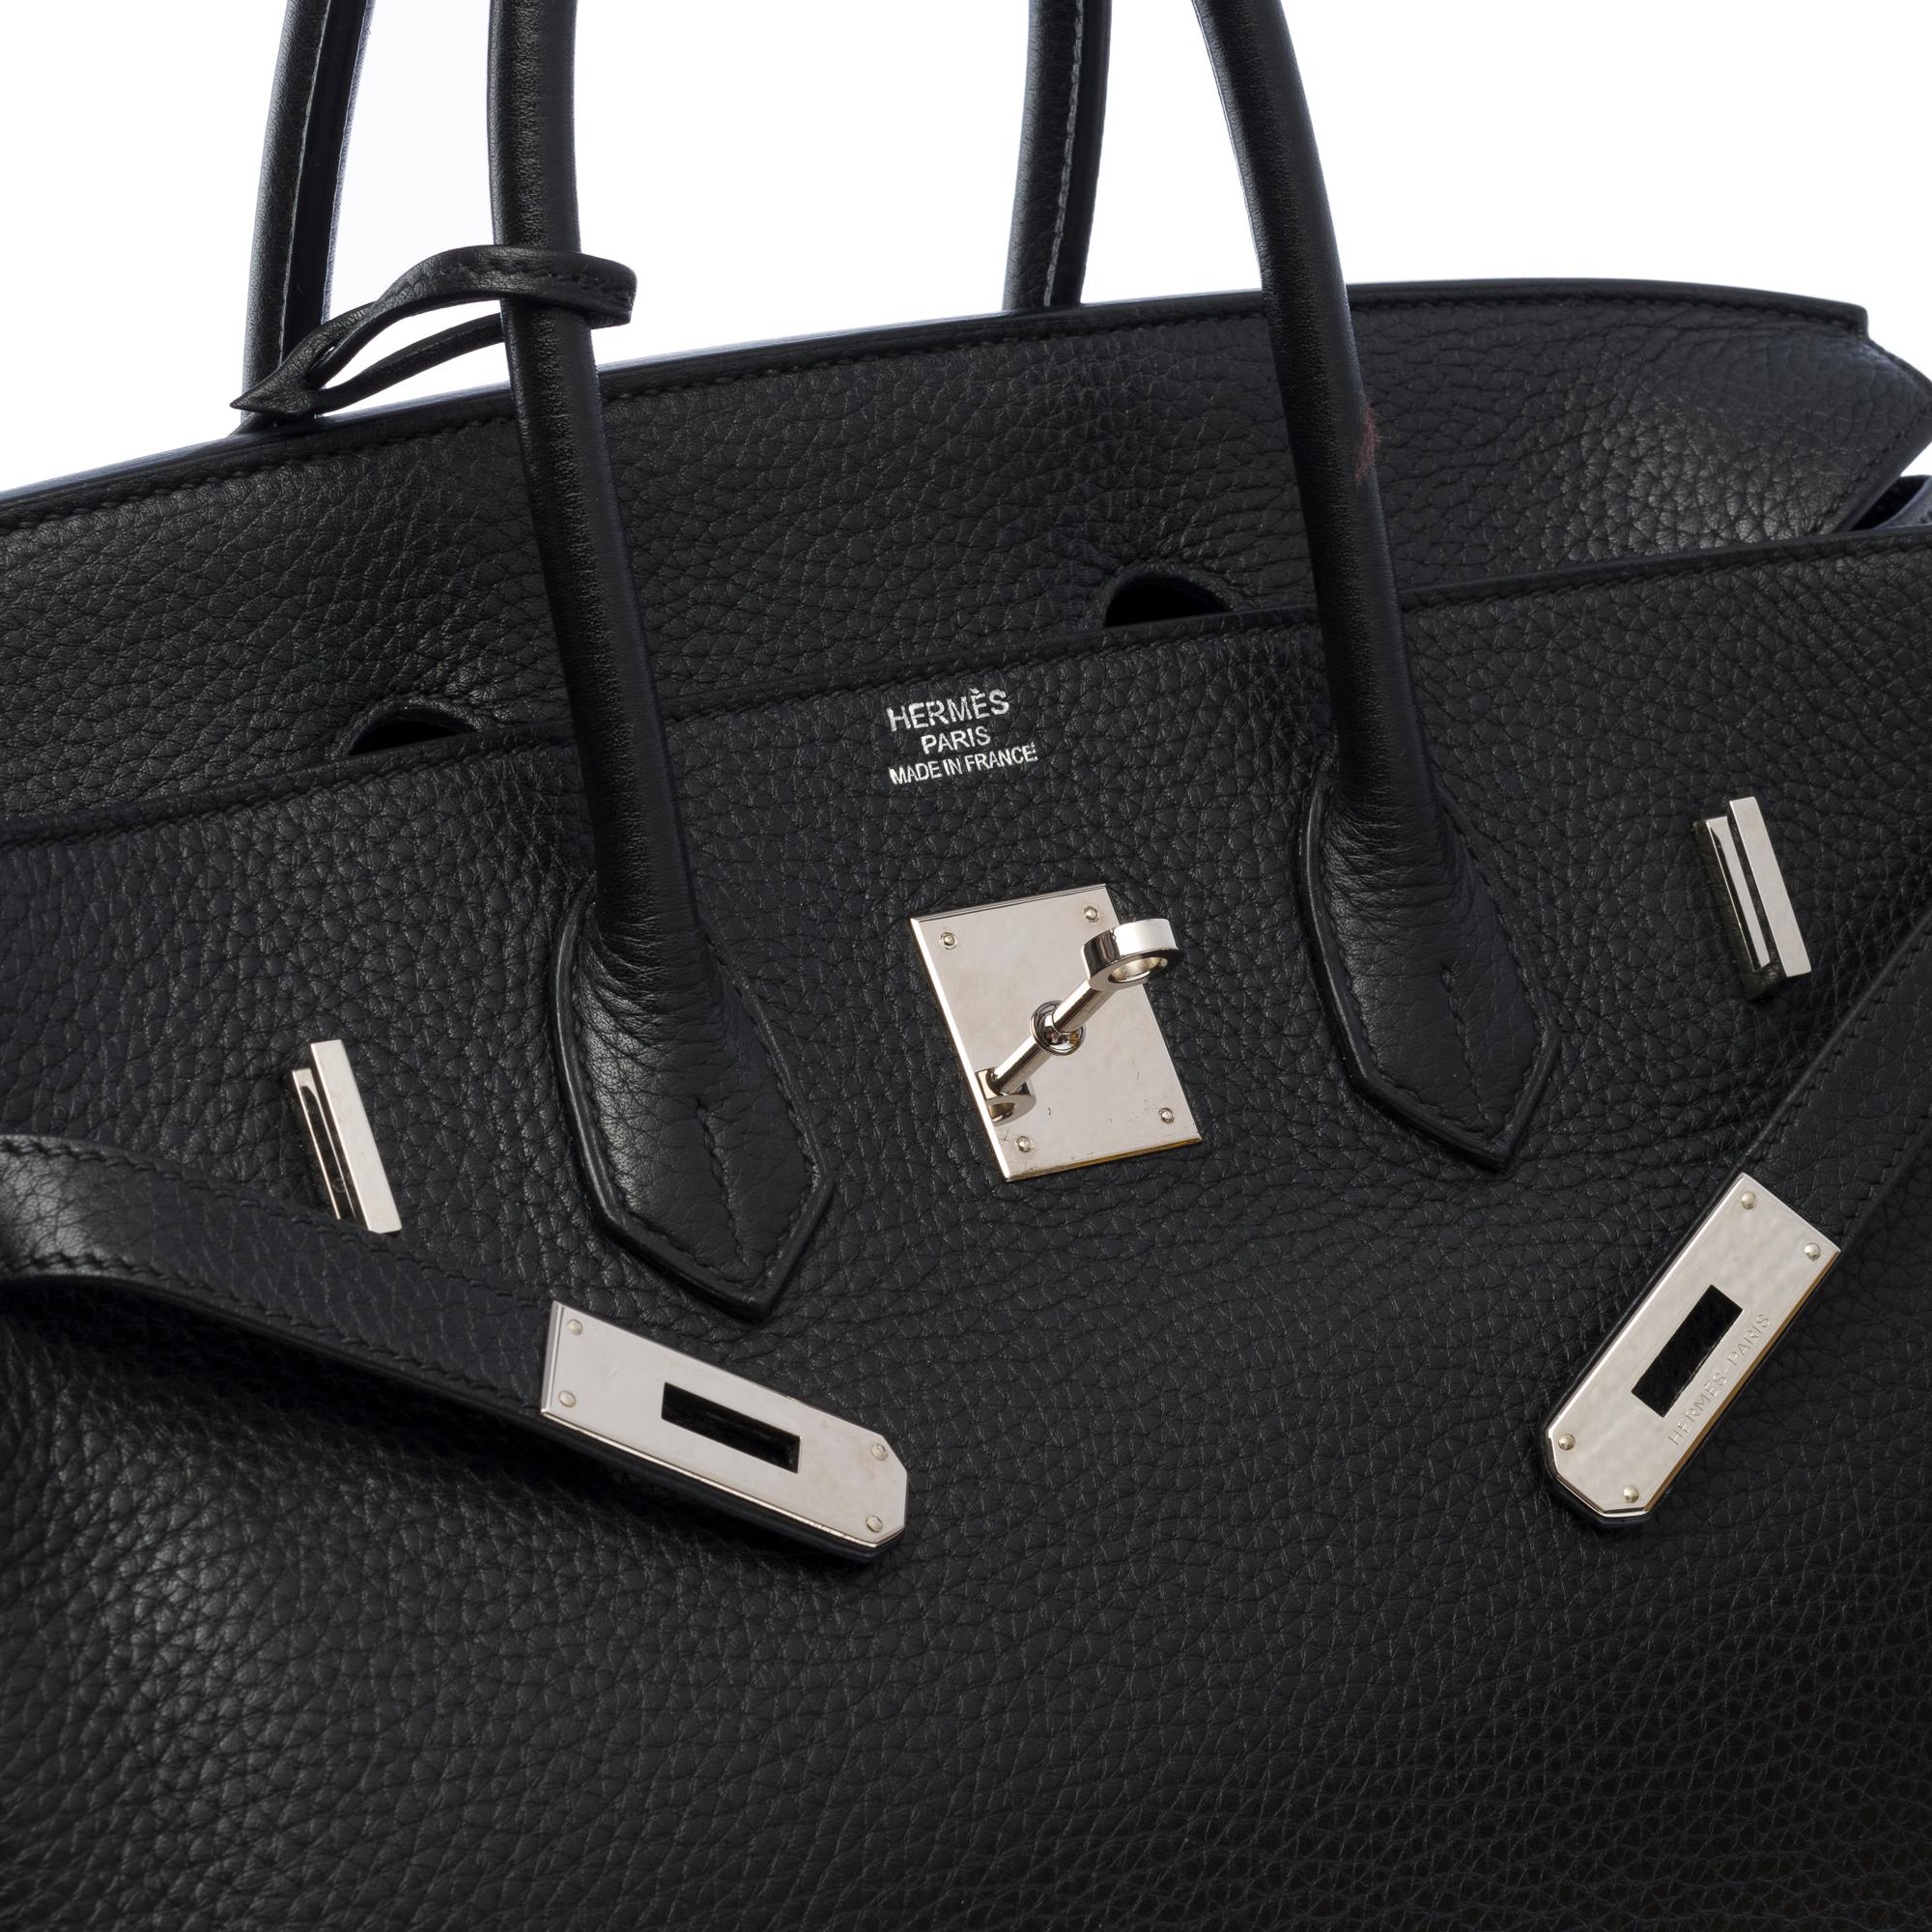 Amazing Hermès Birkin 35 handbag in black Togo leather, SHW 2